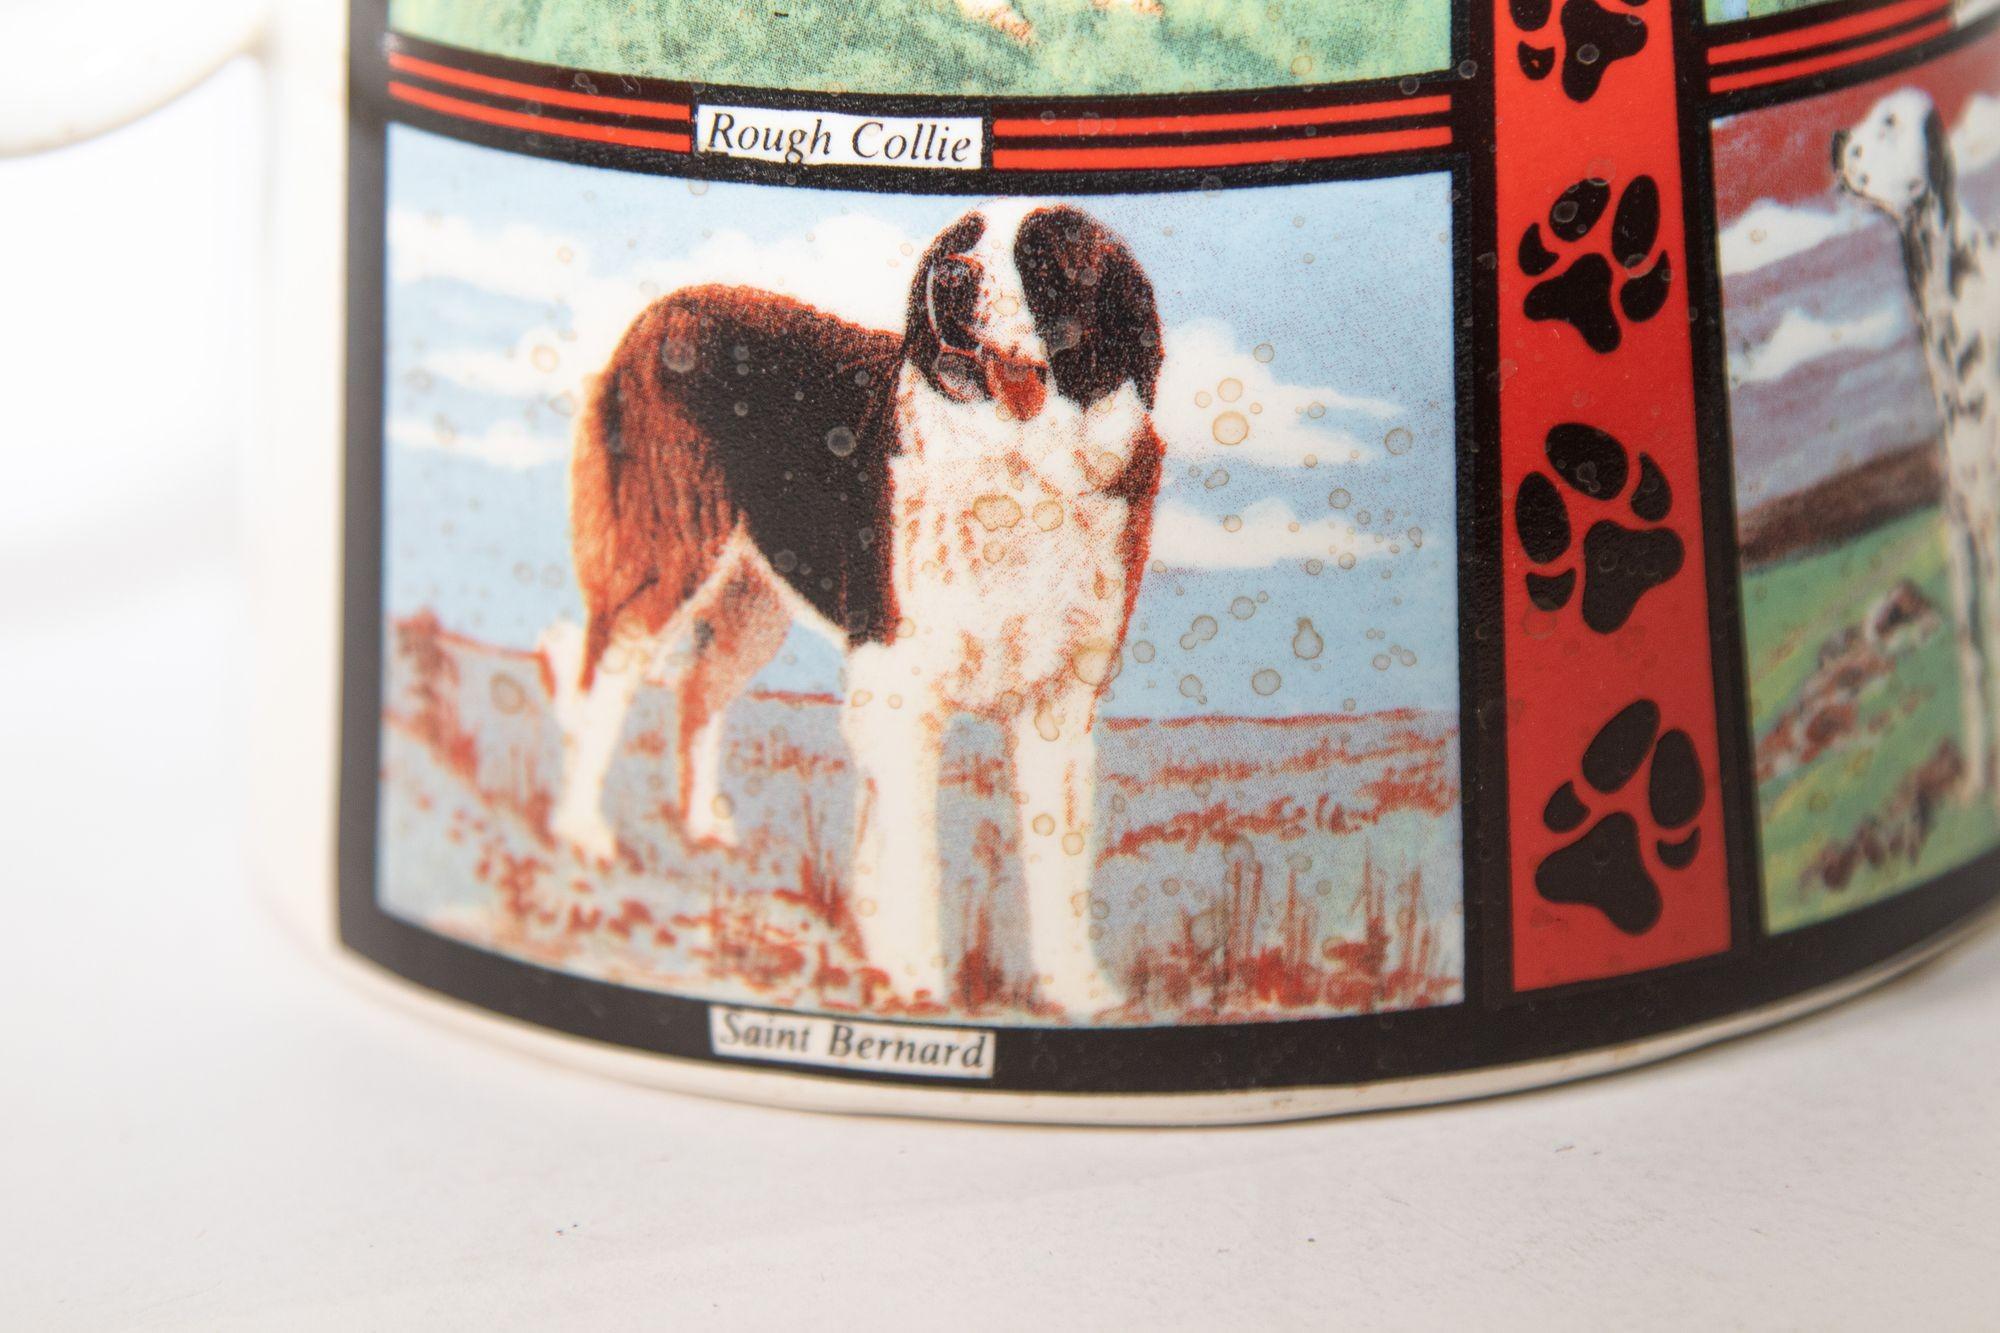 Vintage 1970s Ceramic Pitcher, Derbyshire England with Dog Breeds Pictures For Sale 6